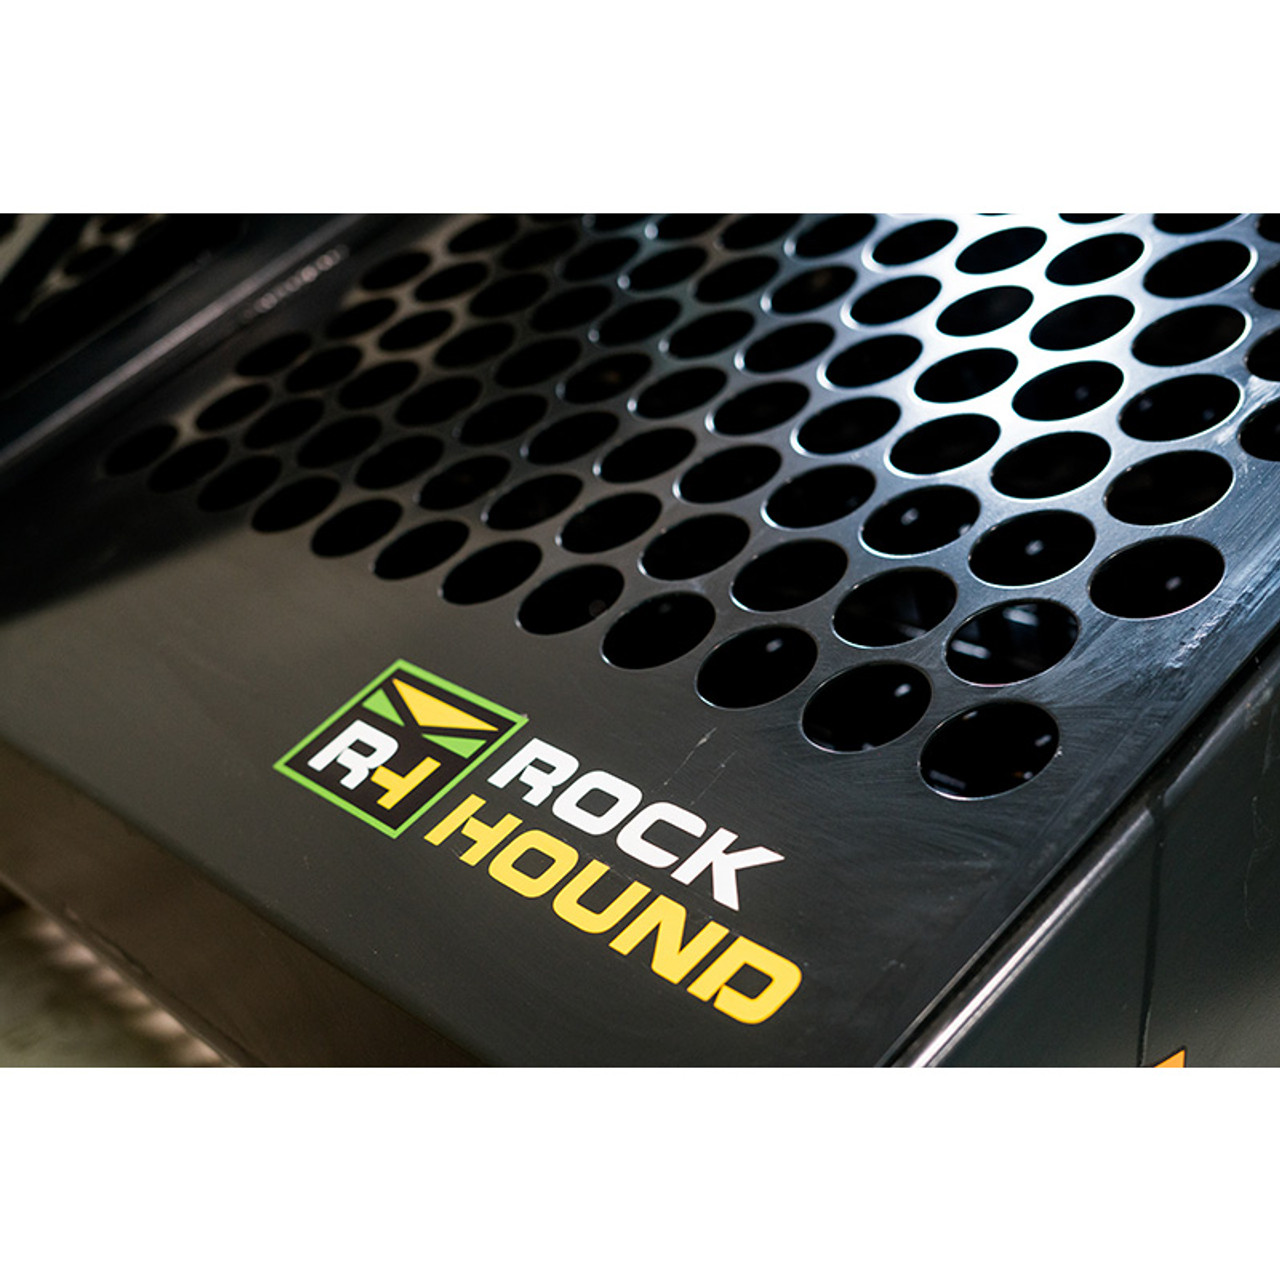 2021 Iron Rhino 72 Hydraulic Landscape Rake - Rock Hound Skid